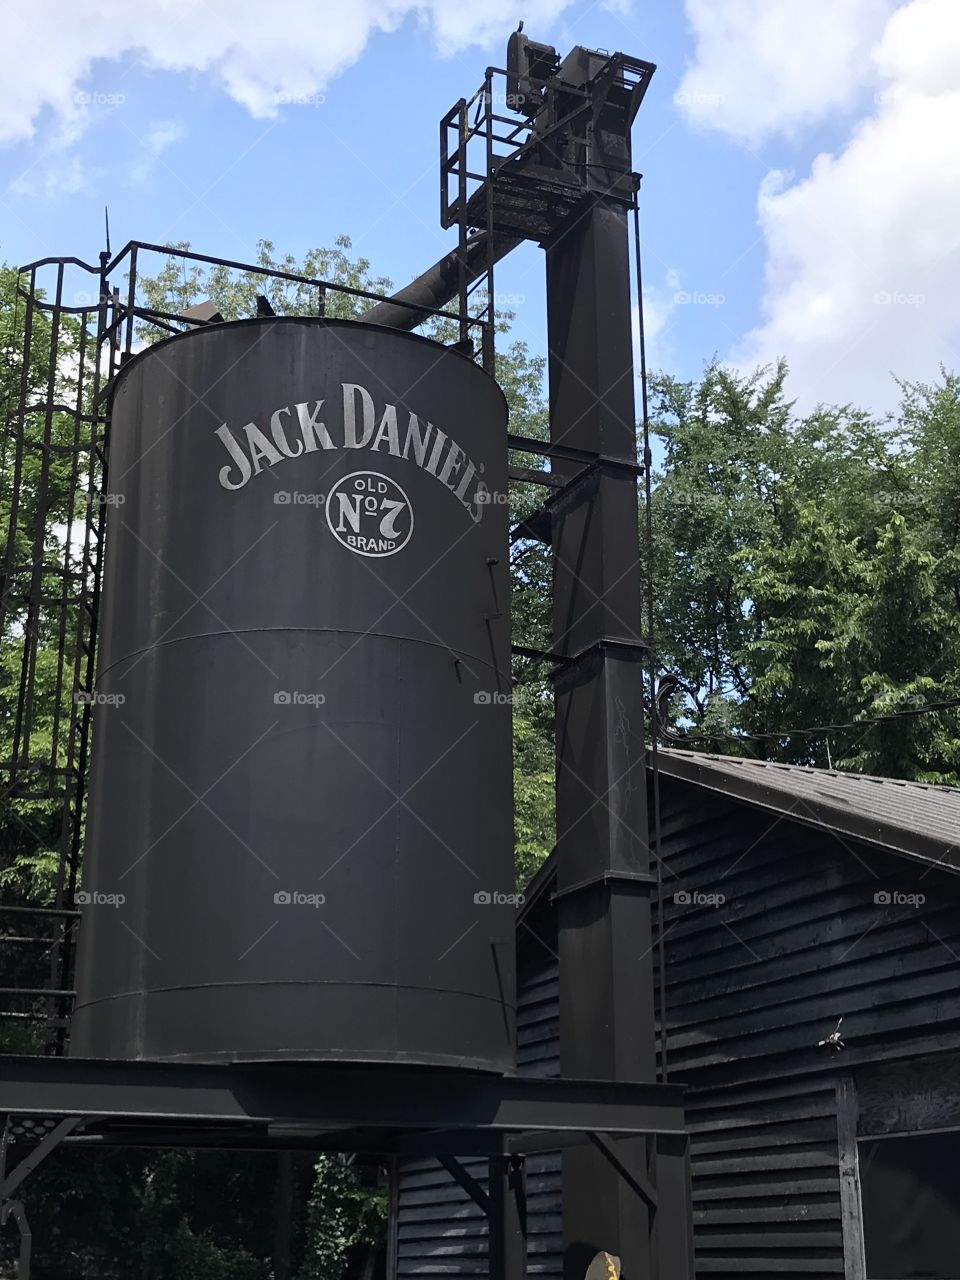 Jack Daniels TN Whiskey 